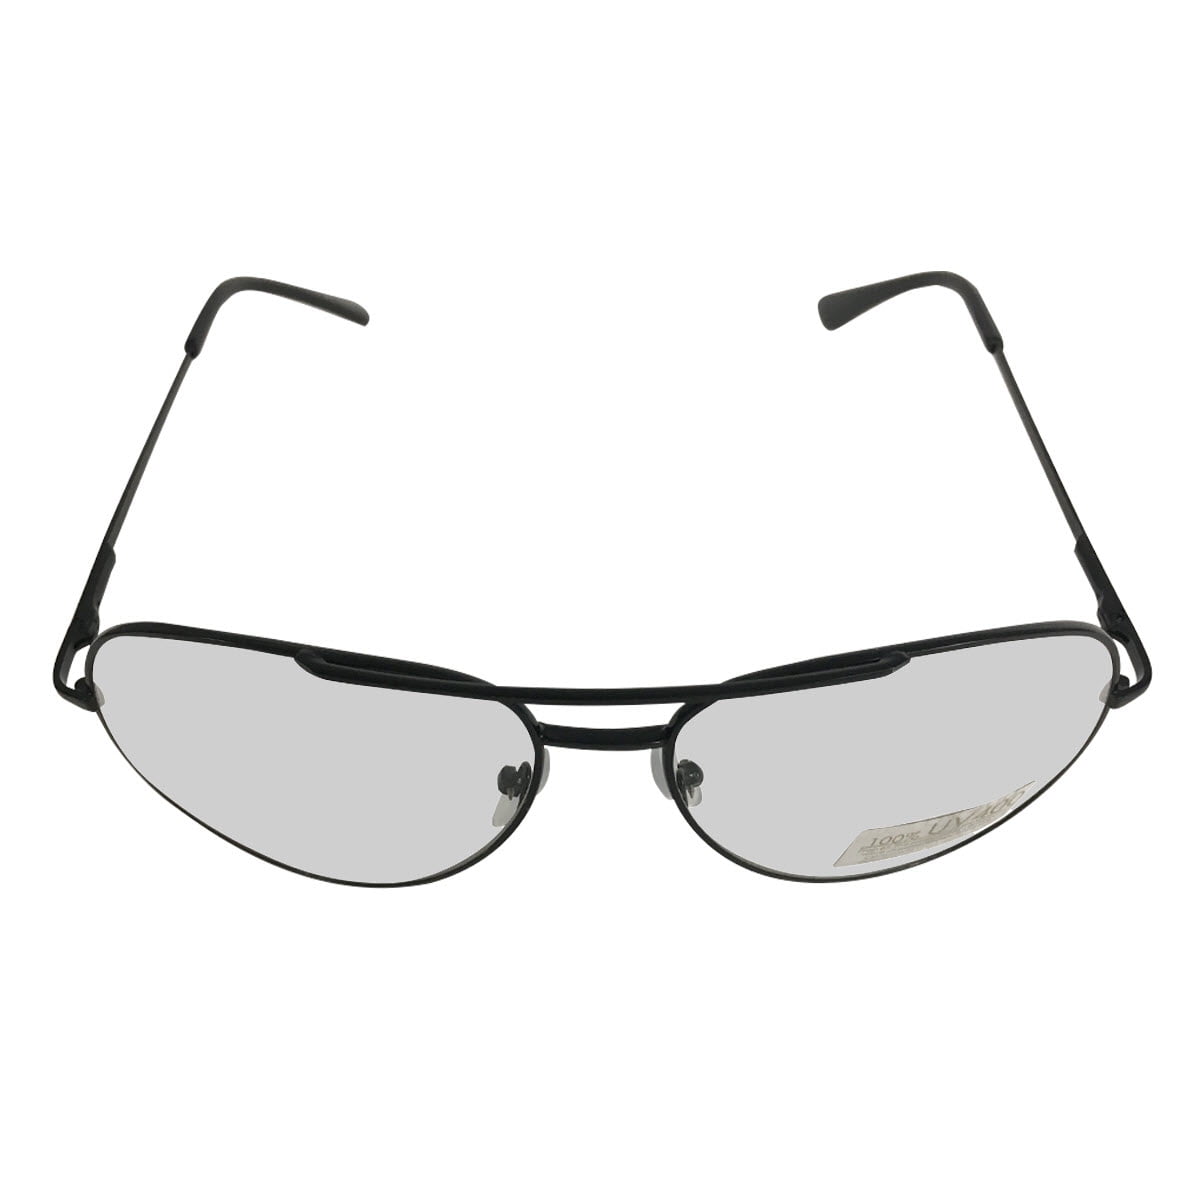 Black Rounded Thick Frame Clear Glasses  Johnny Depp Sunglasses Round Lens Nerd 